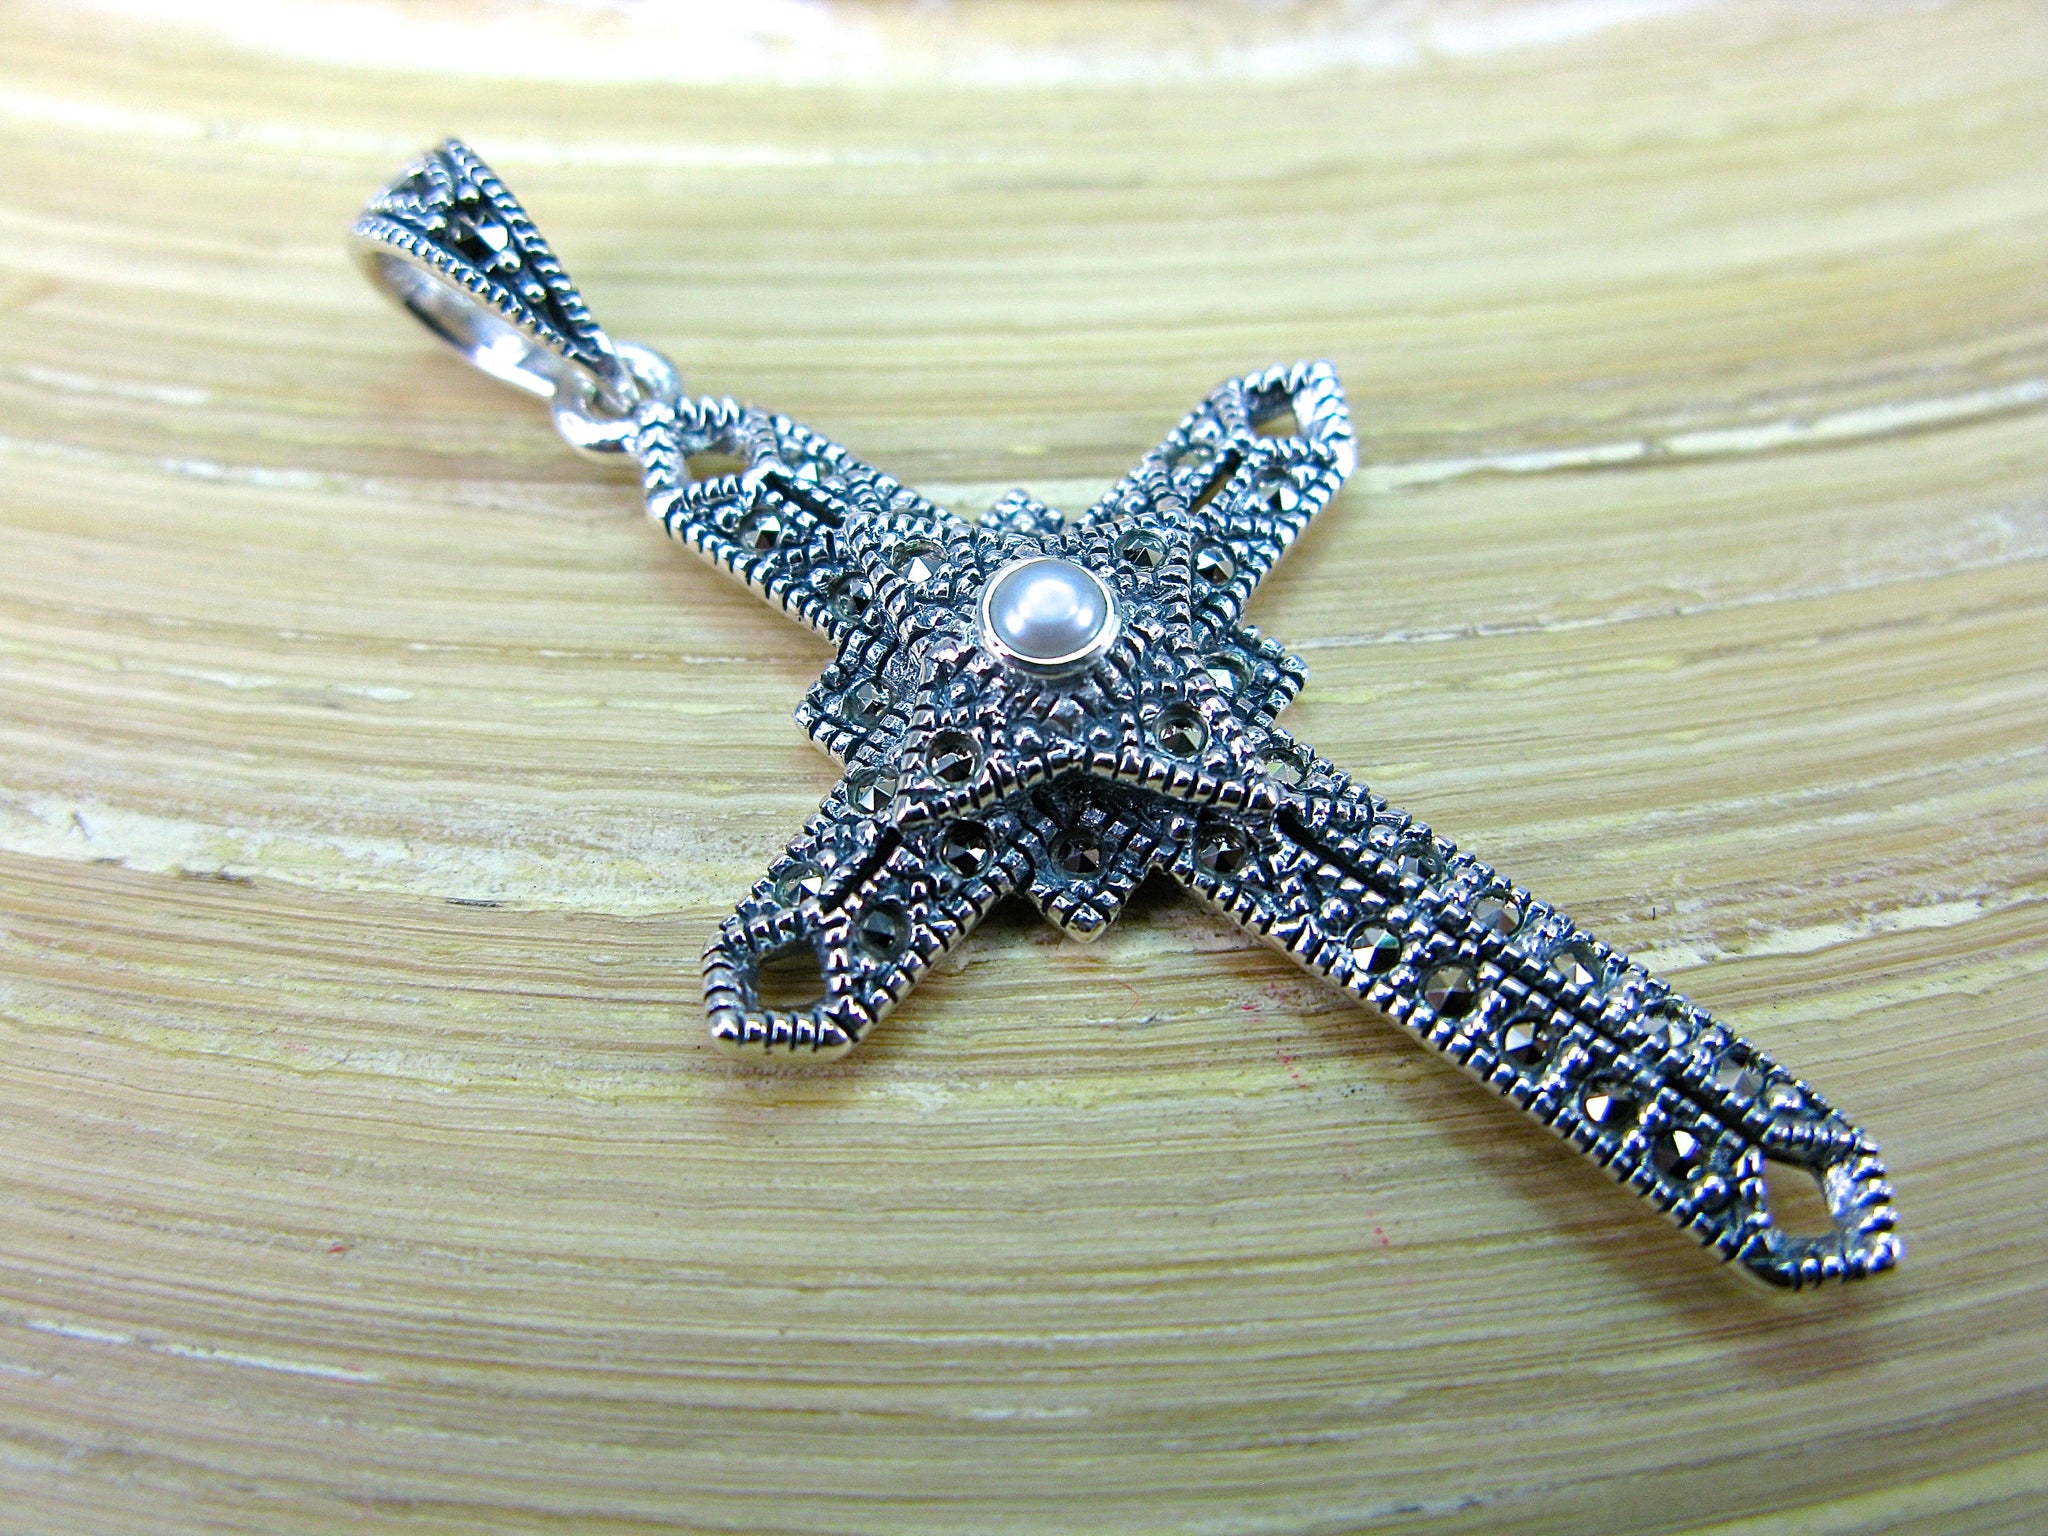 Cross Marcasite Pearl Pendant in 925 Sterling Silver